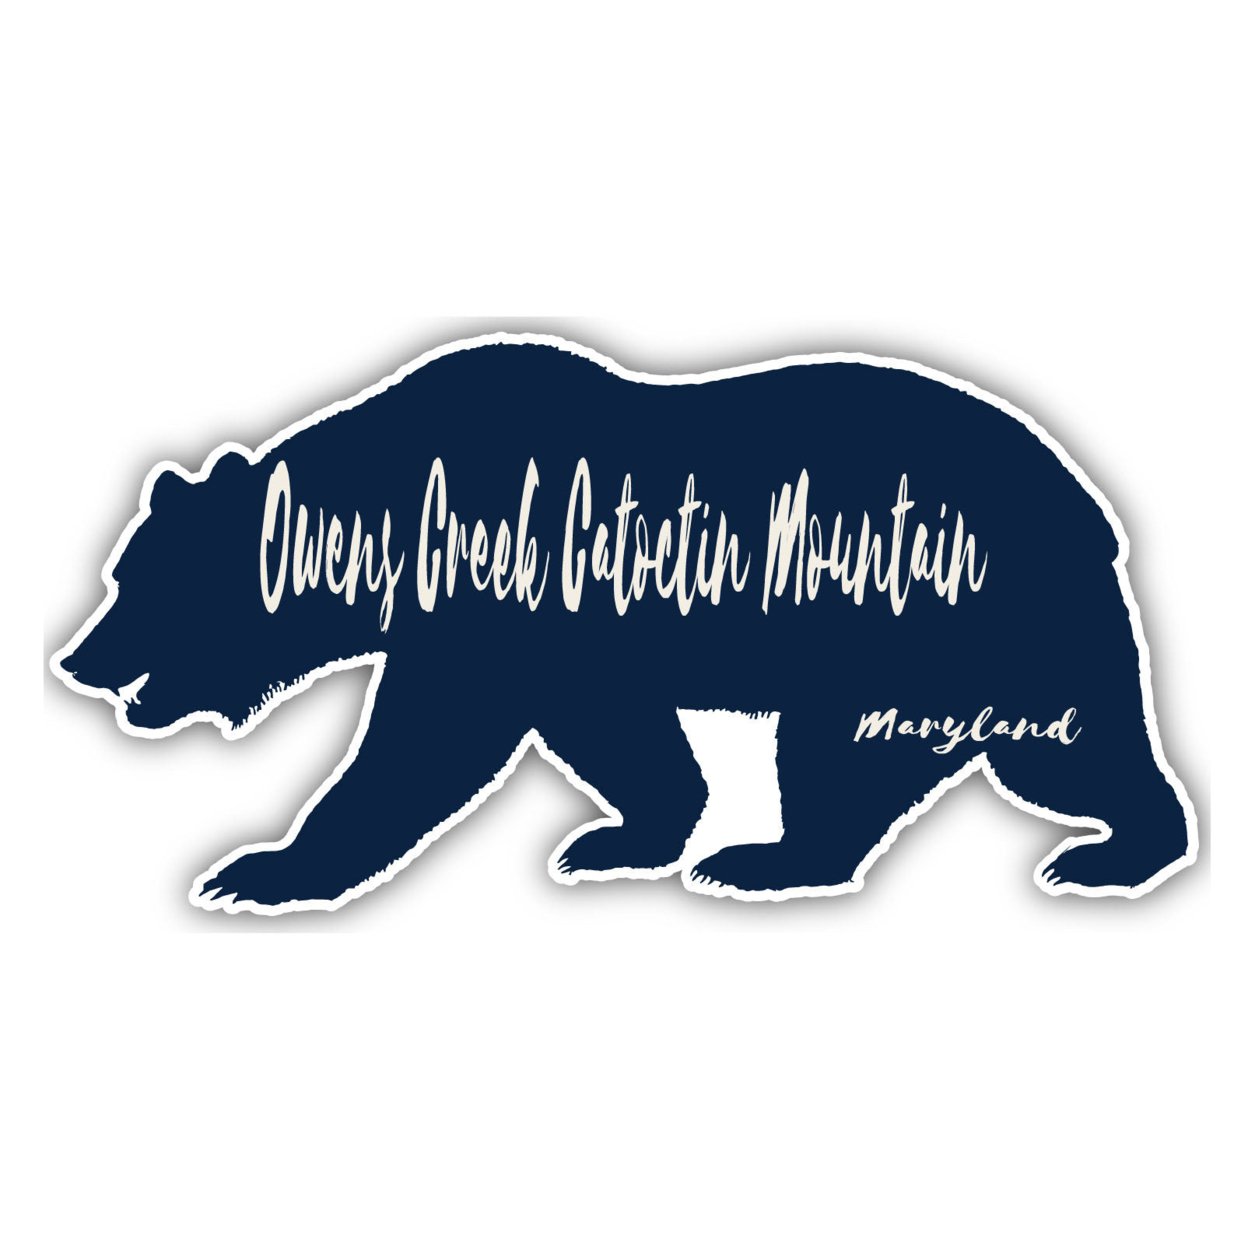 Owens Creek Catoctin Mountain Maryland Souvenir Decorative Stickers (Choose Theme And Size) - Single Unit, 2-Inch, Bear